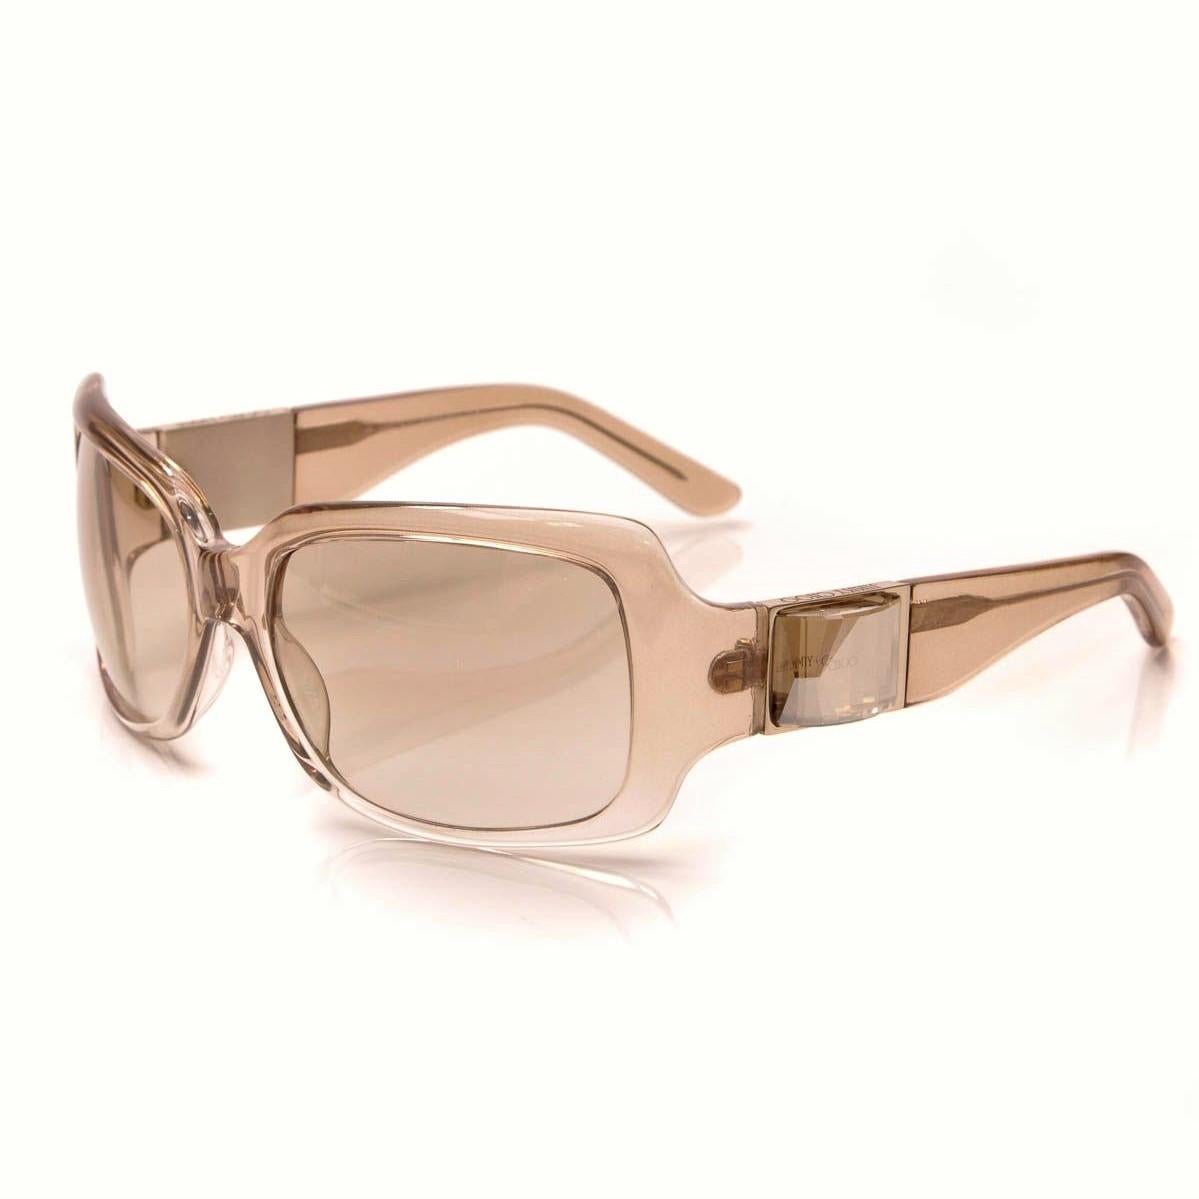 jimmy choo sunglasses with swarovski crystals